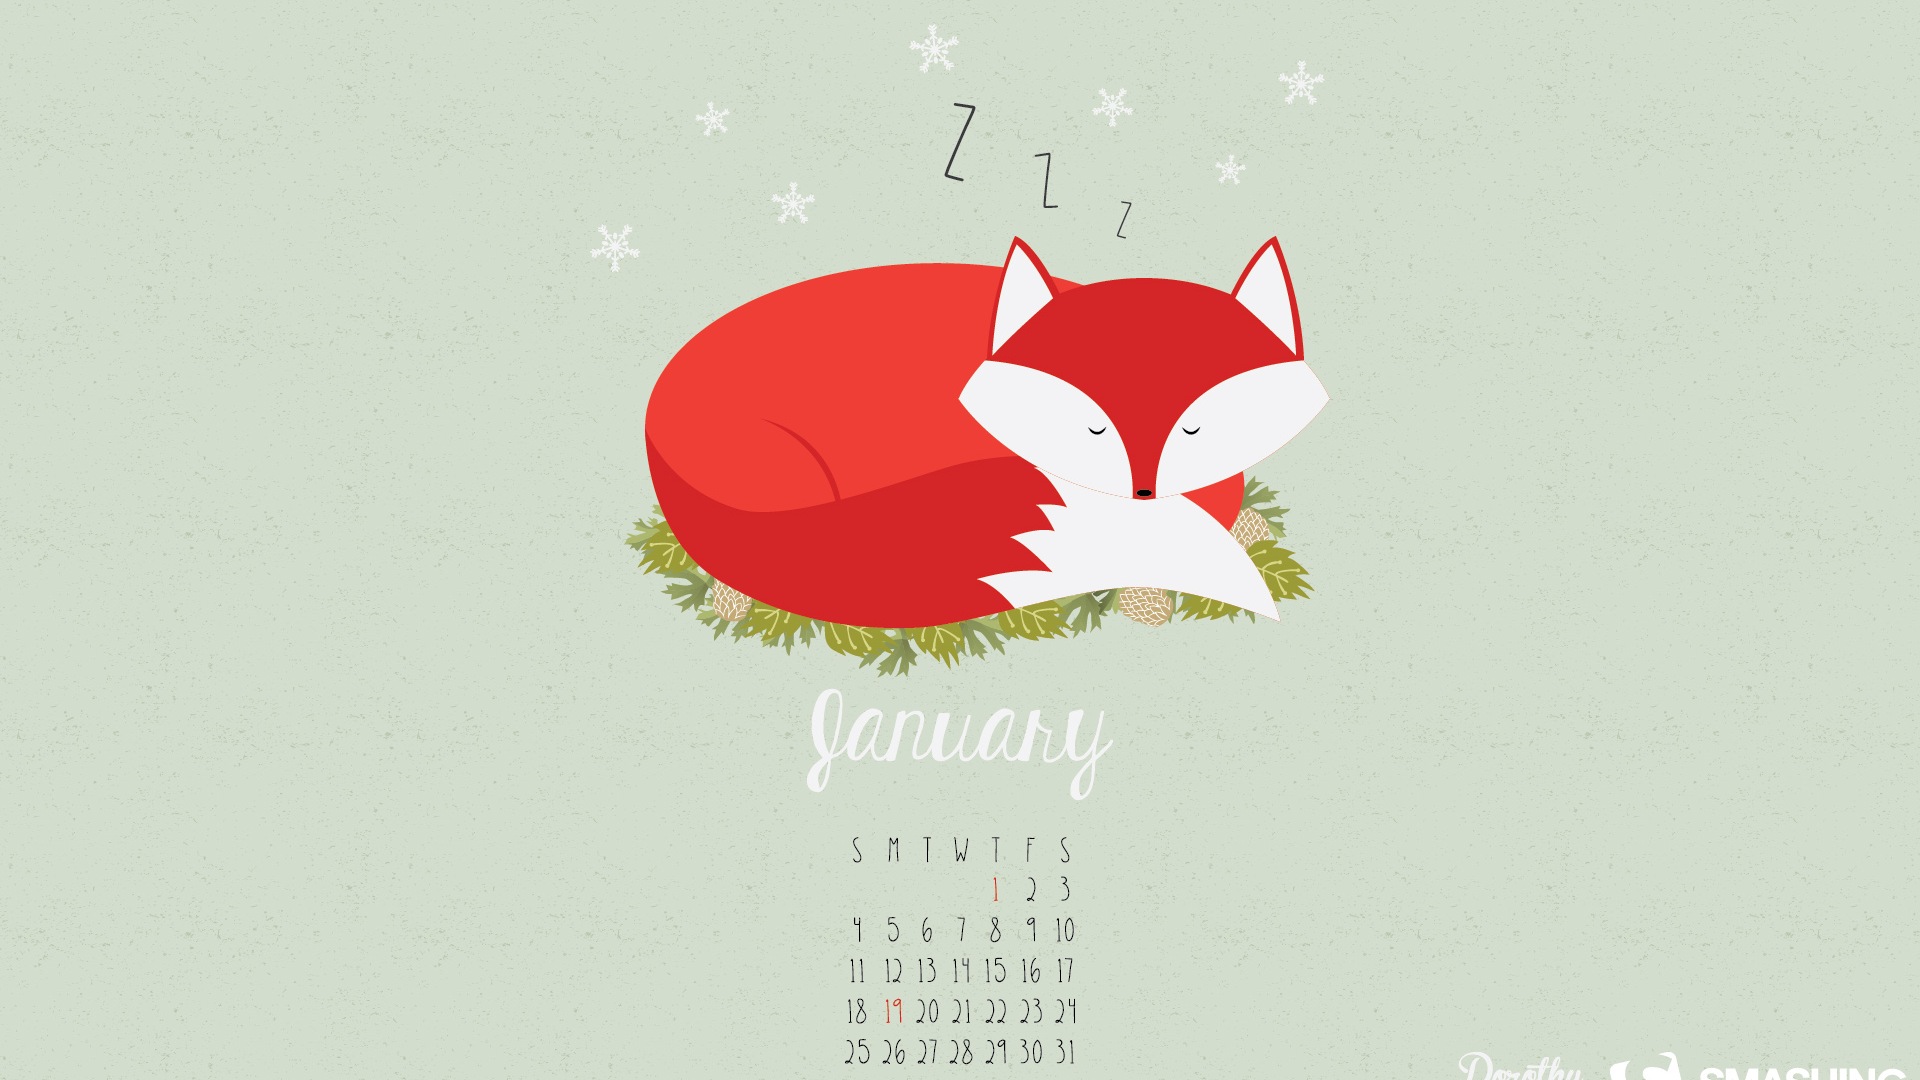 January 2015 calendar wallpaper (2) #15 - 1920x1080